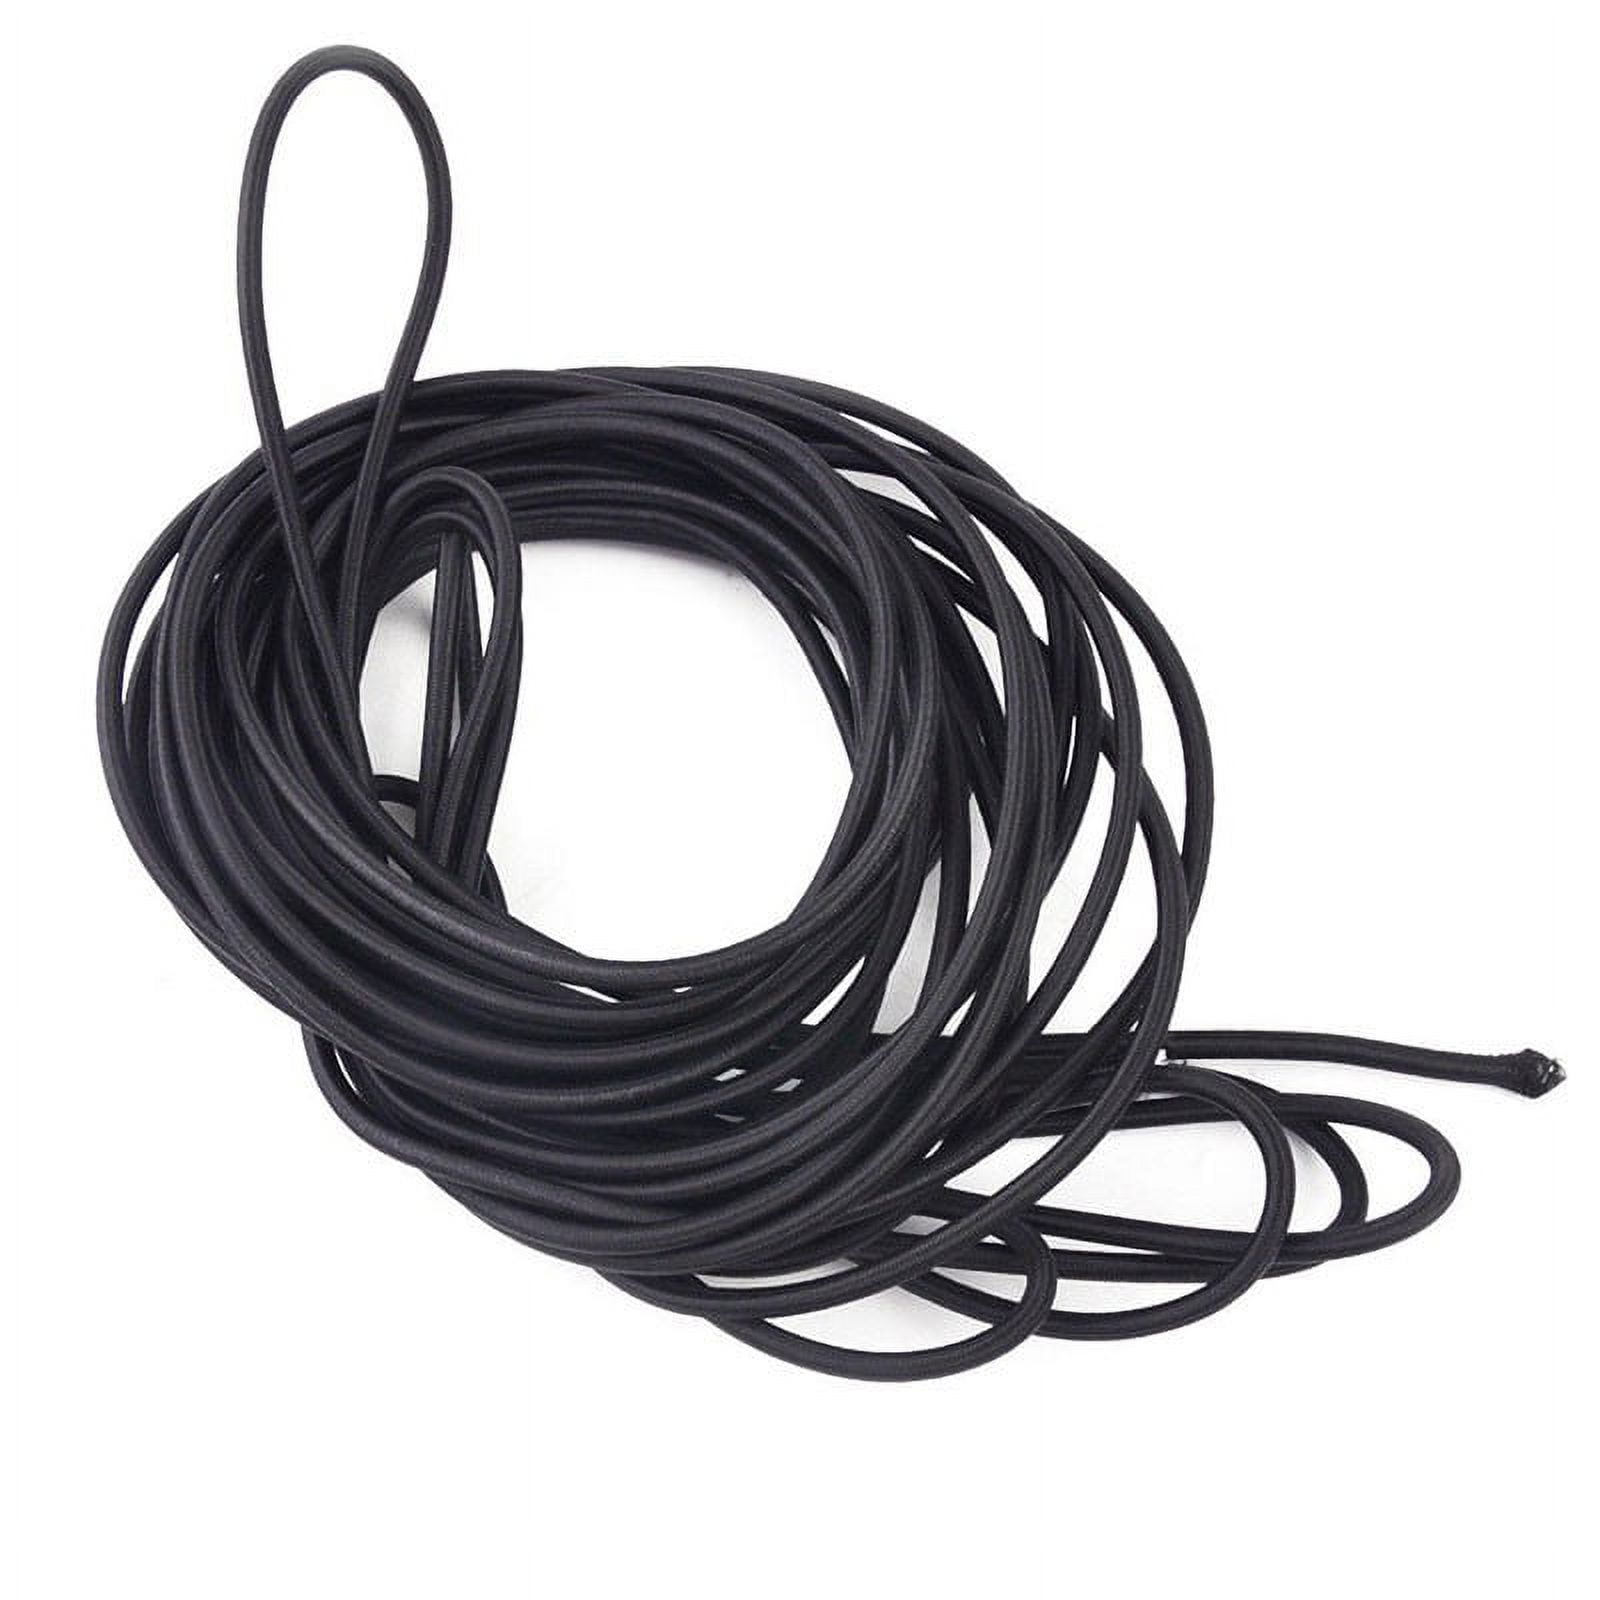 Stretch Elastic Bungee Rope, 4mm Elastic Bungee Cord